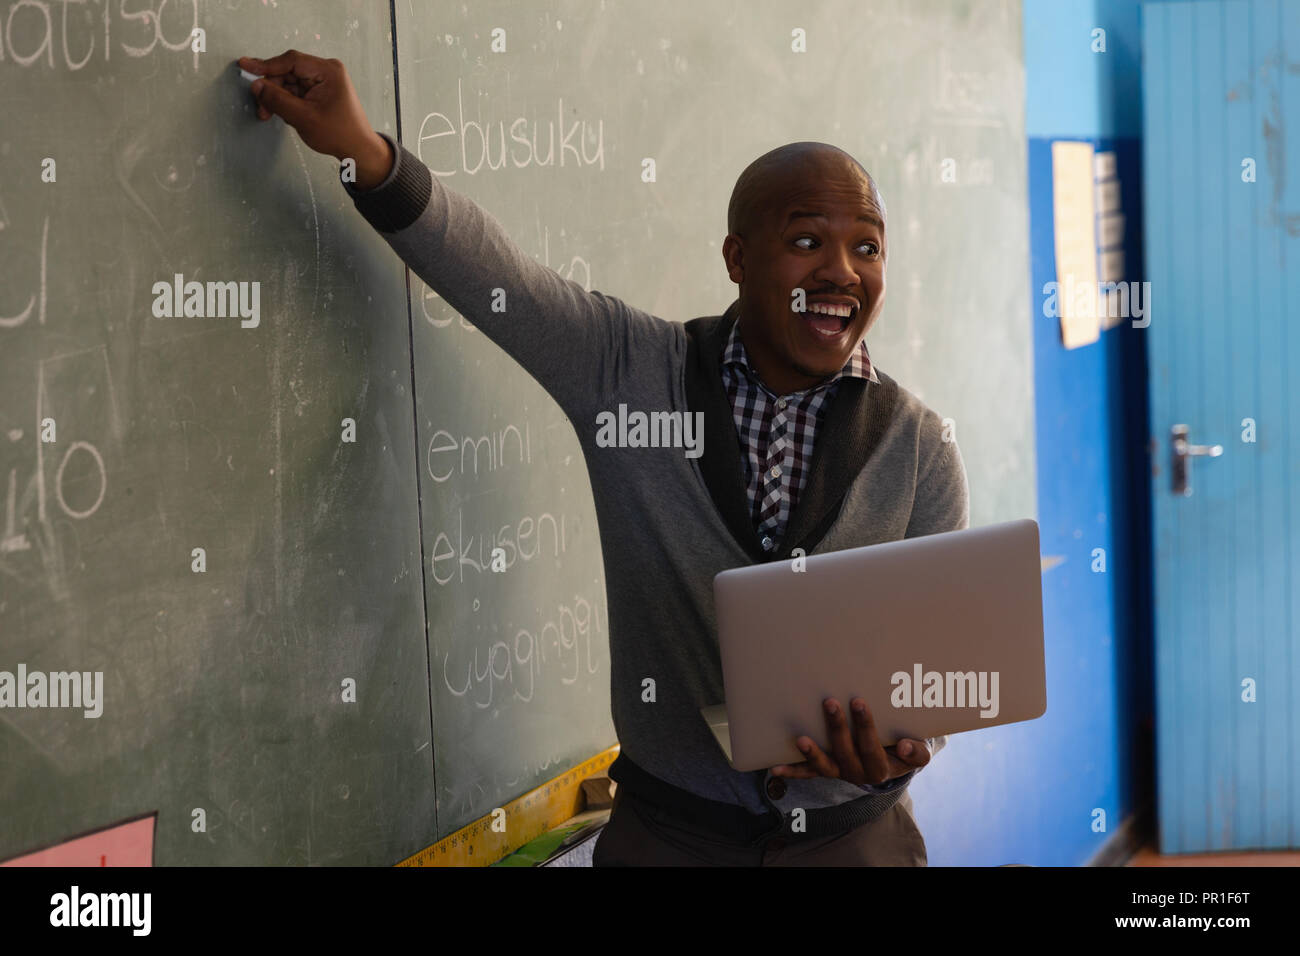 Male teacher explaining on chalkboard Stock Photo